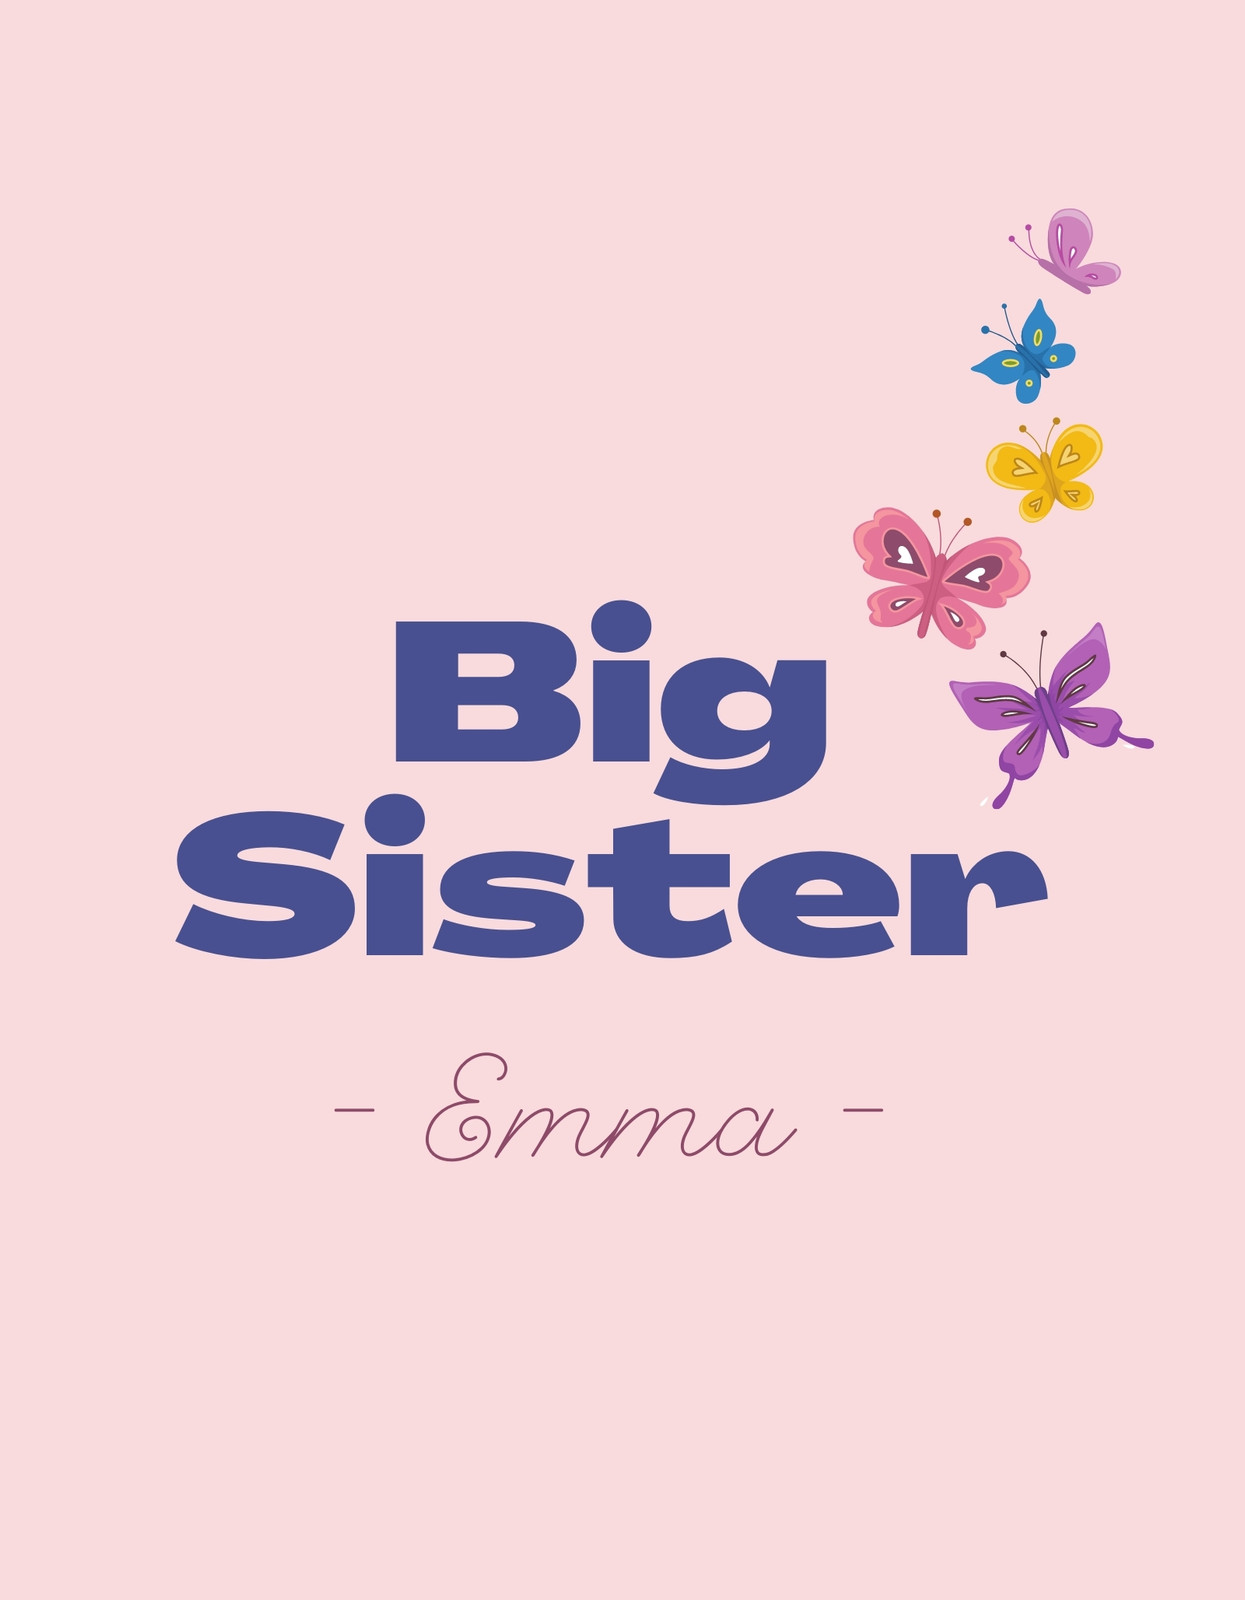 Meet Big Sister